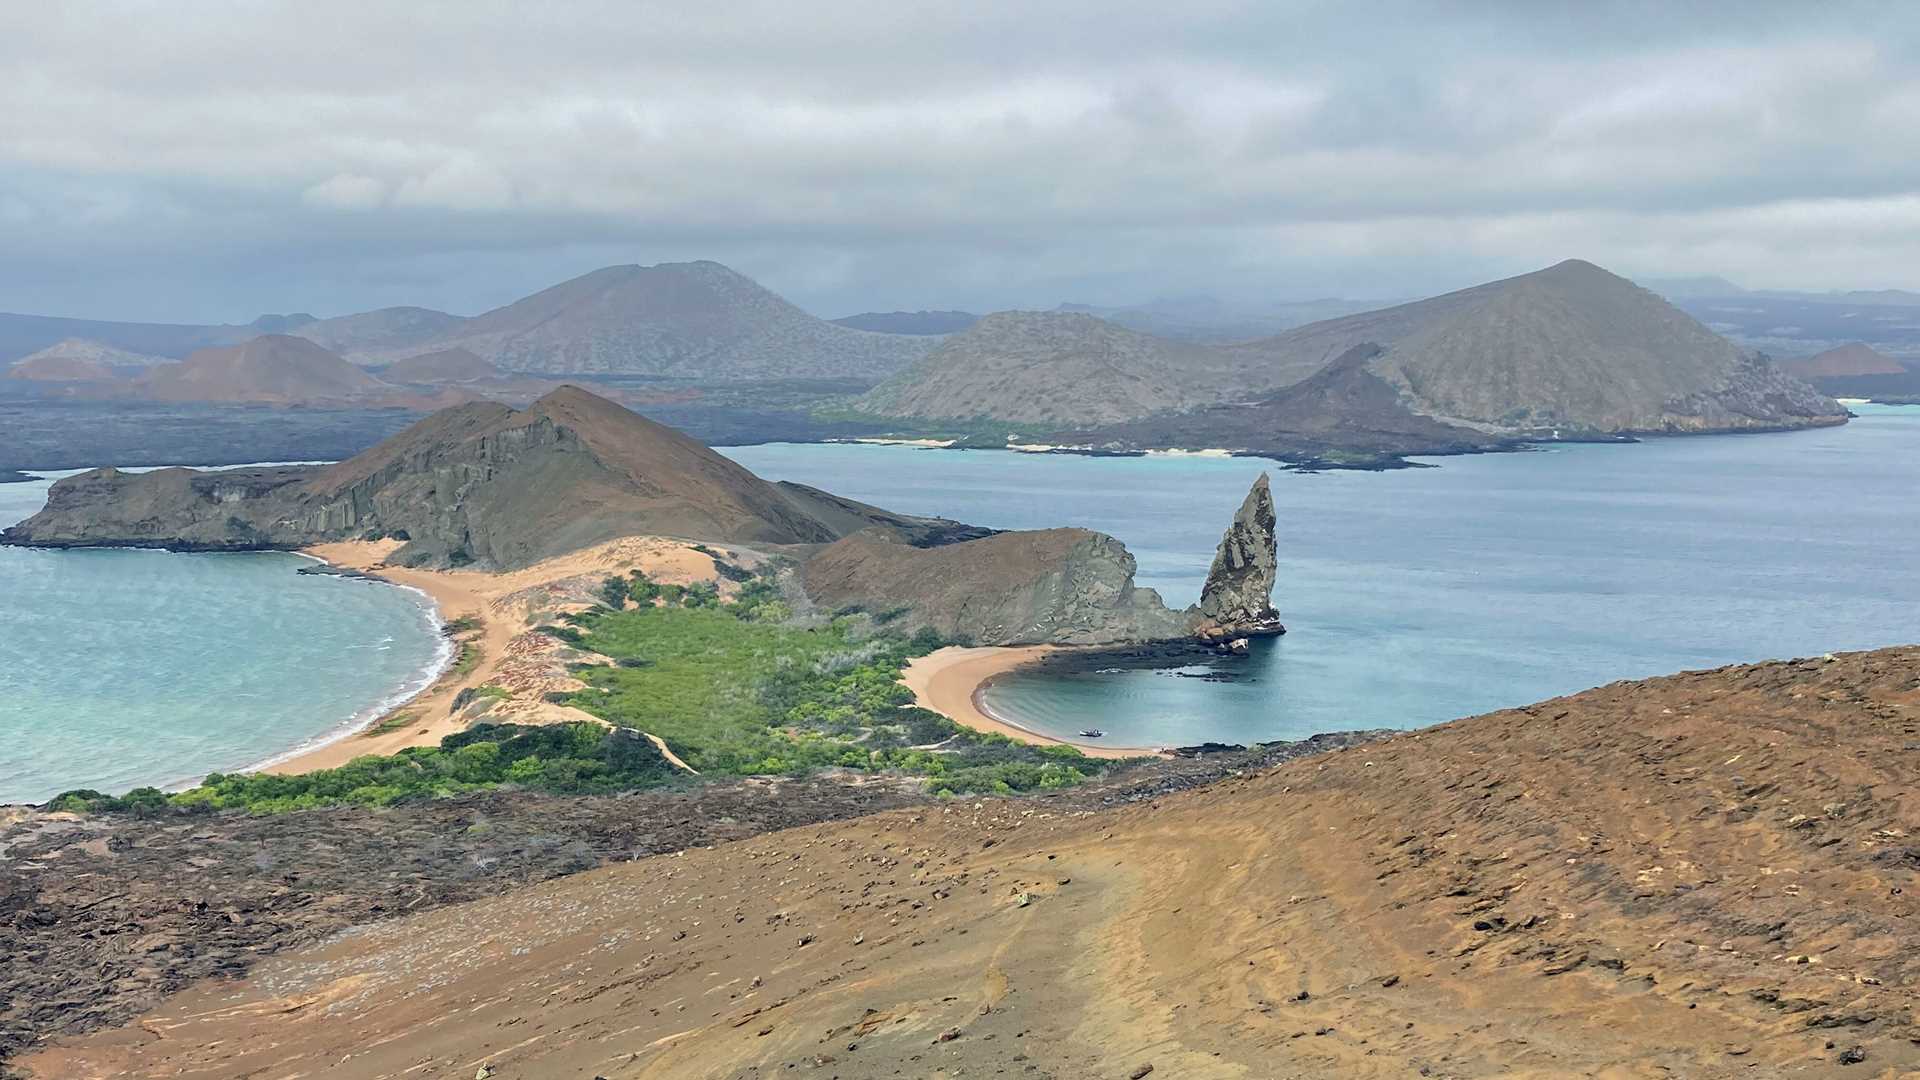 Bartolome Island and Sombrero Chino Island